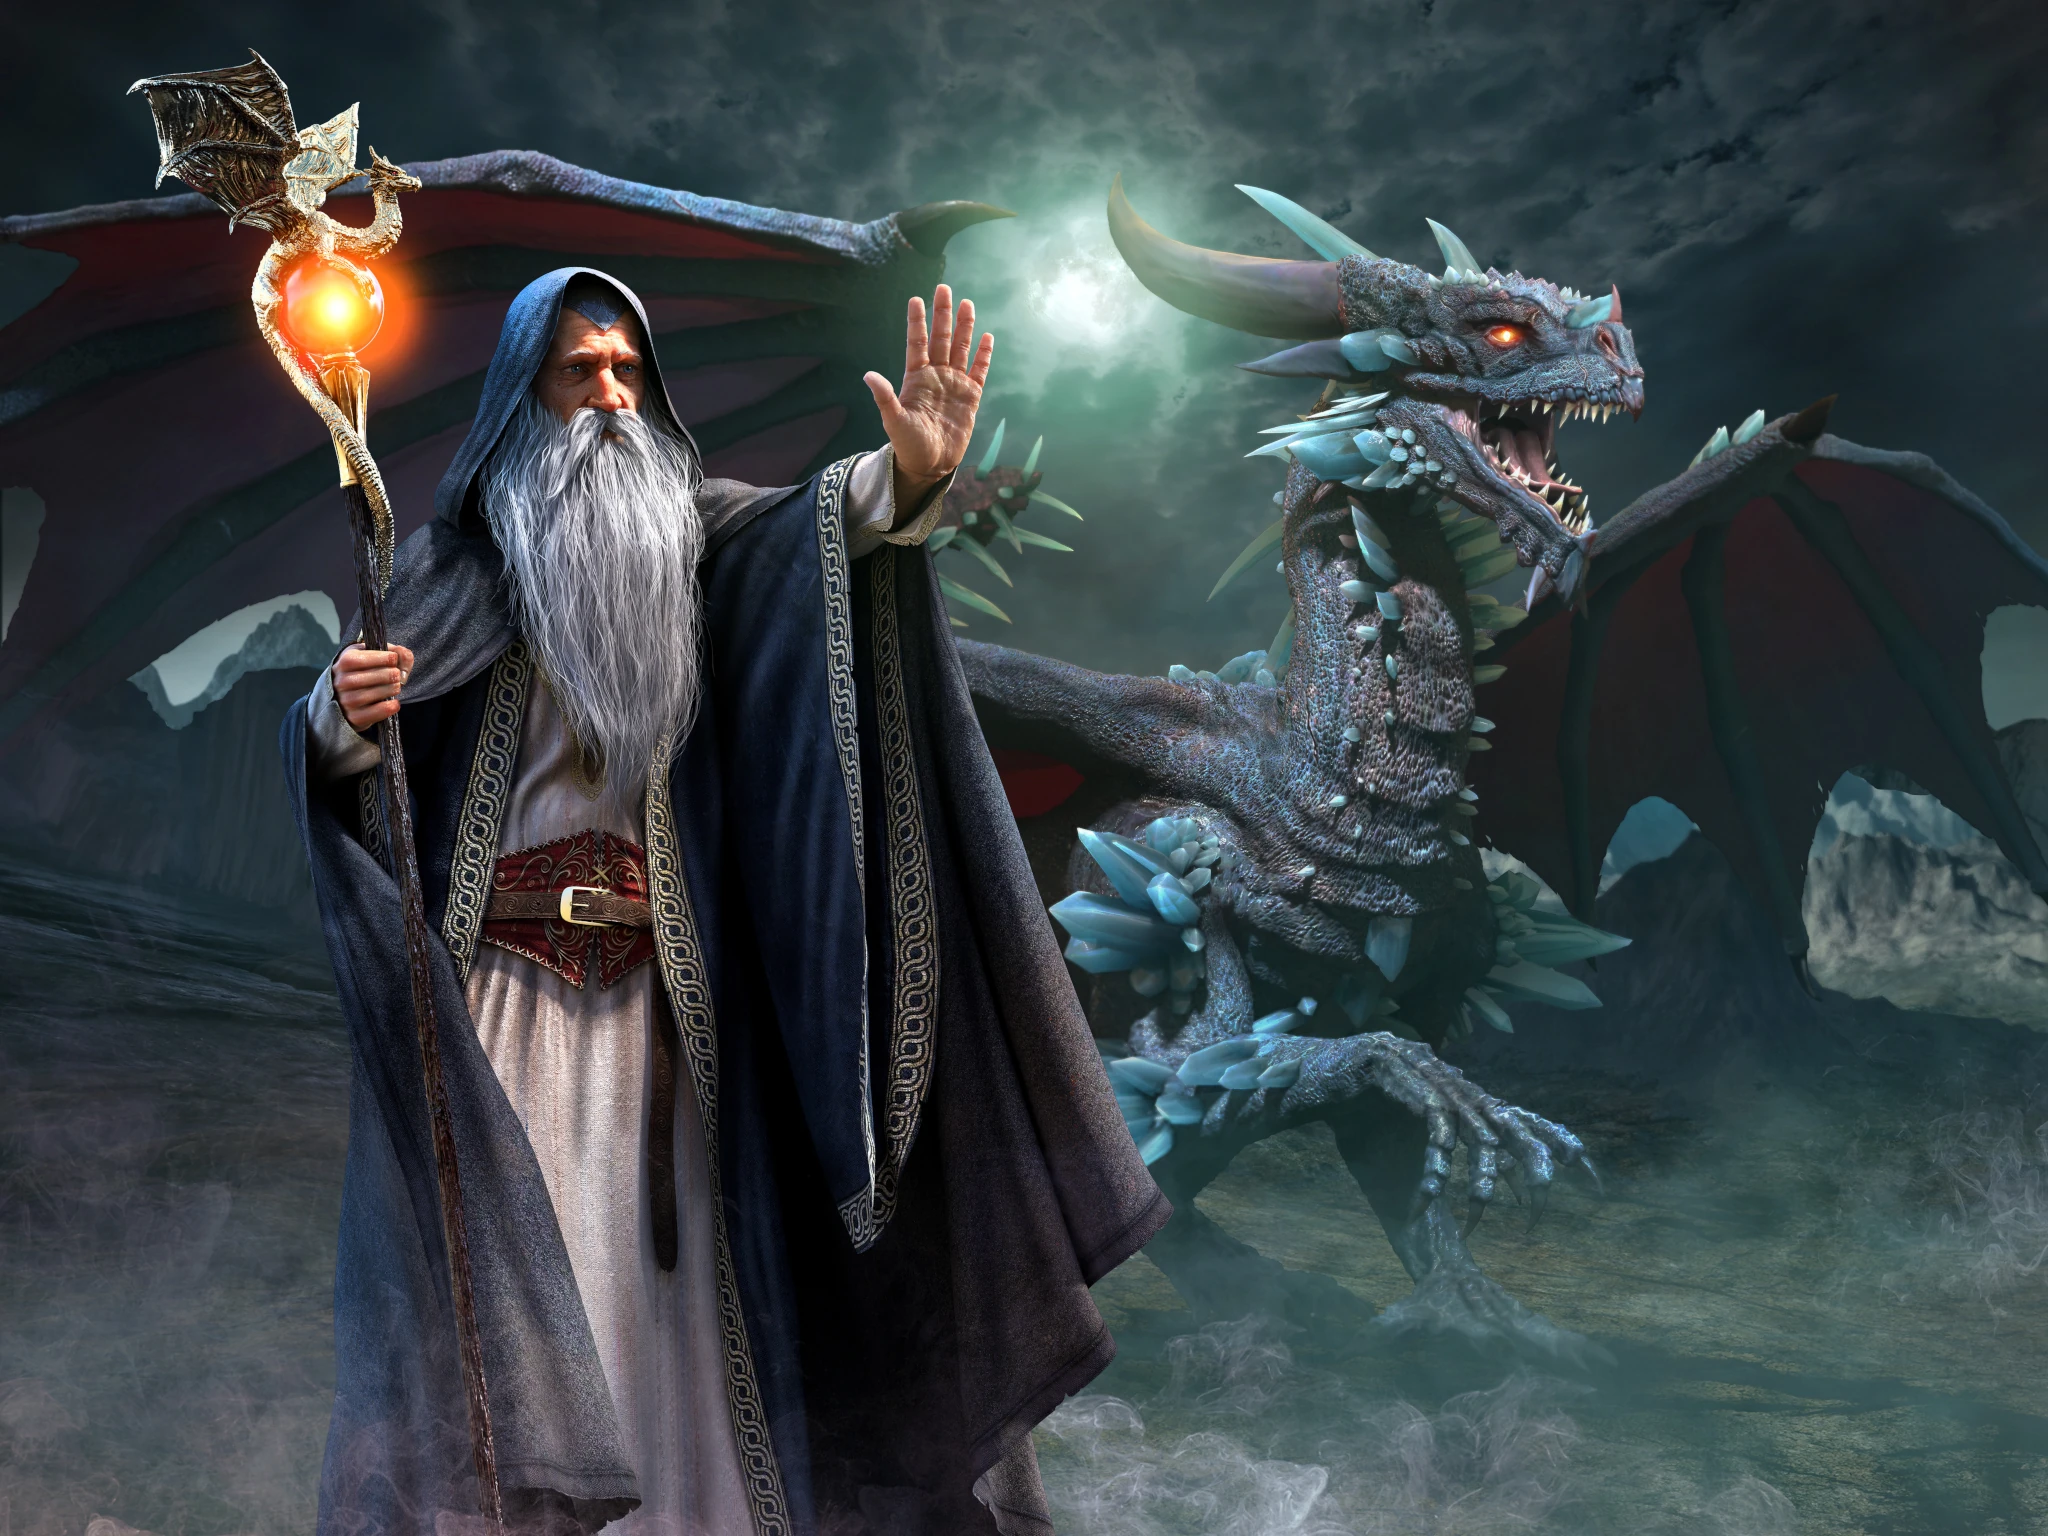 Dragon and wizard, illustrated picture, Fantassia amusement park